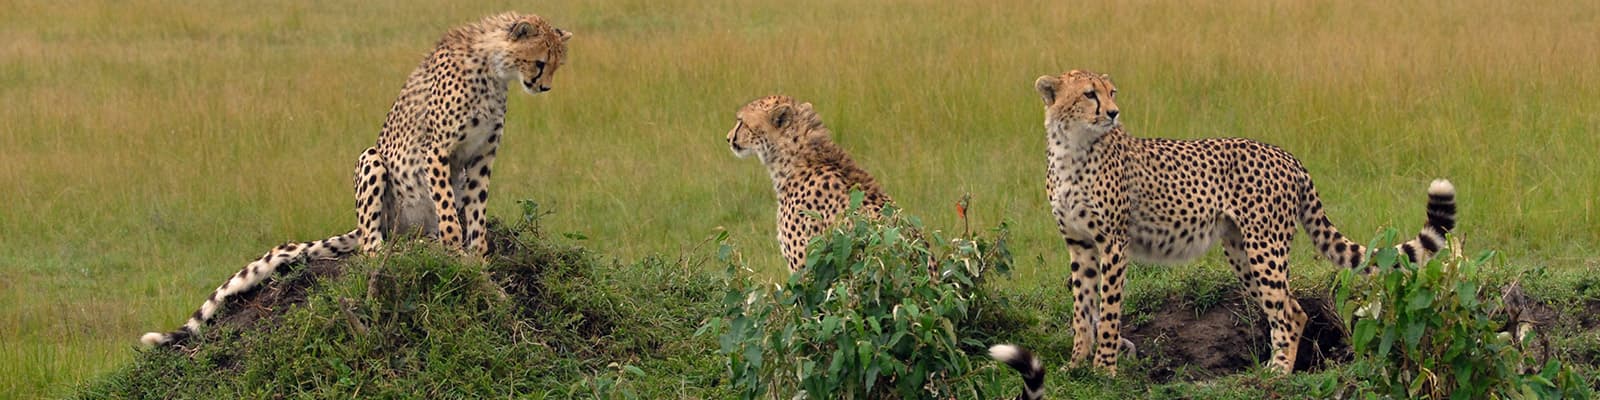 Cheetahs in Kenya